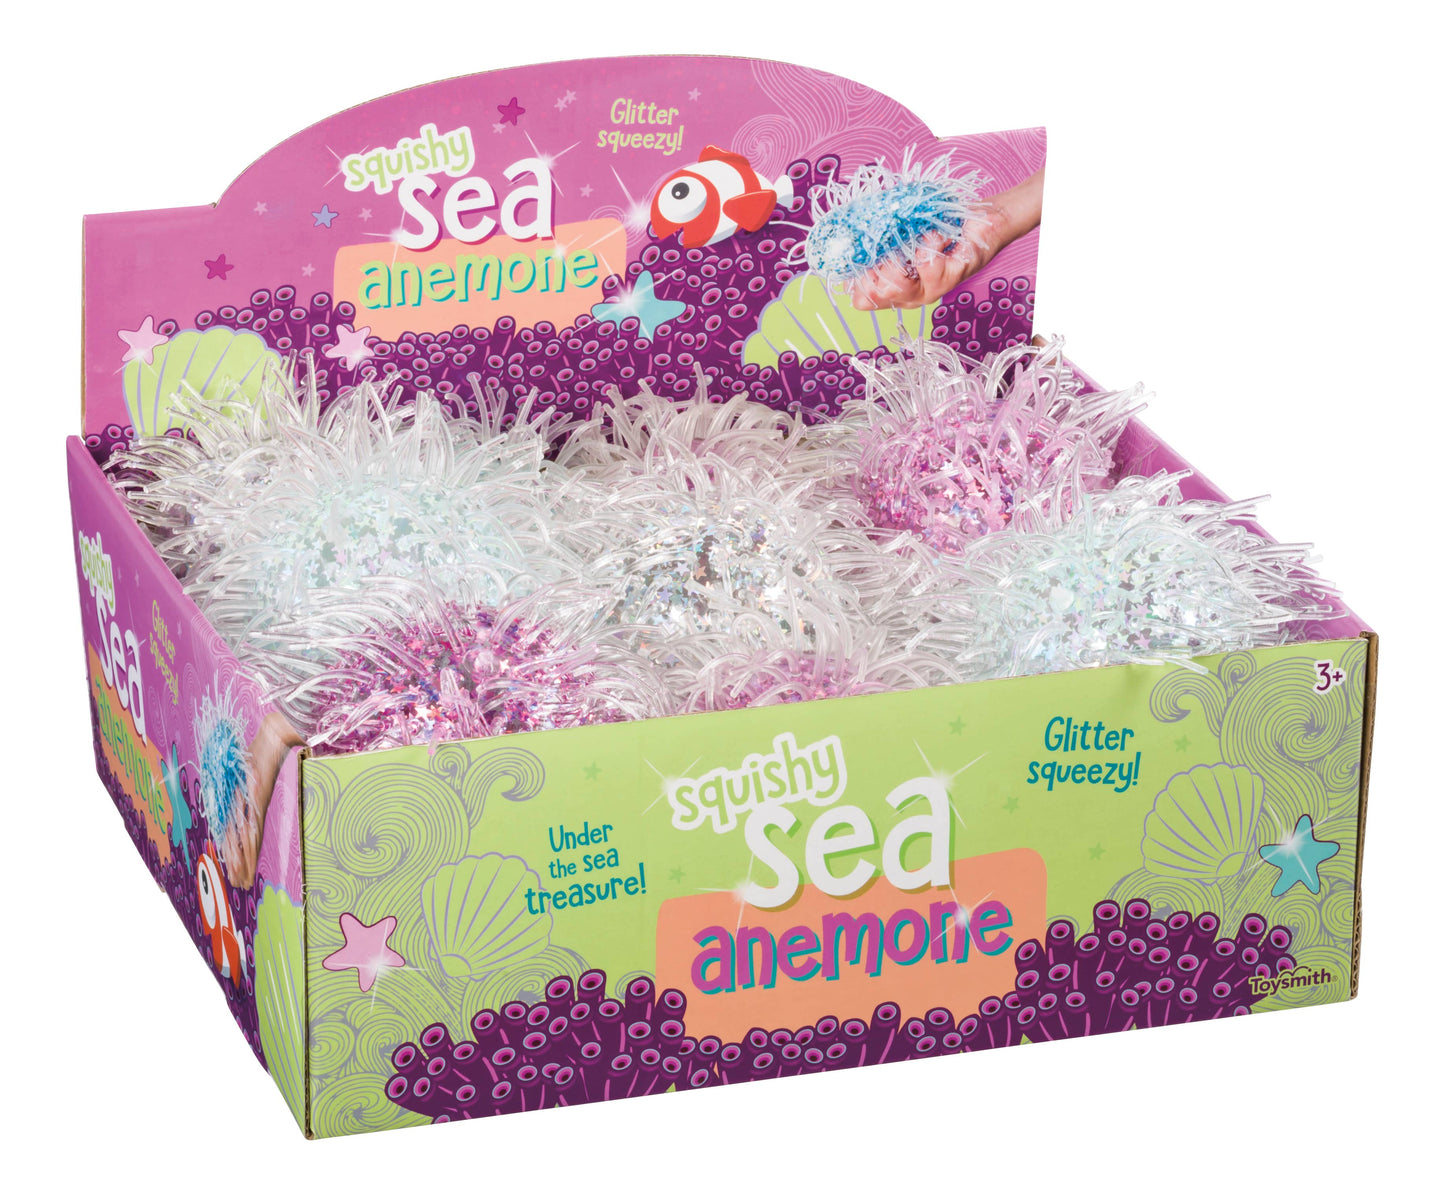 Sea Anemone Squishy Ball